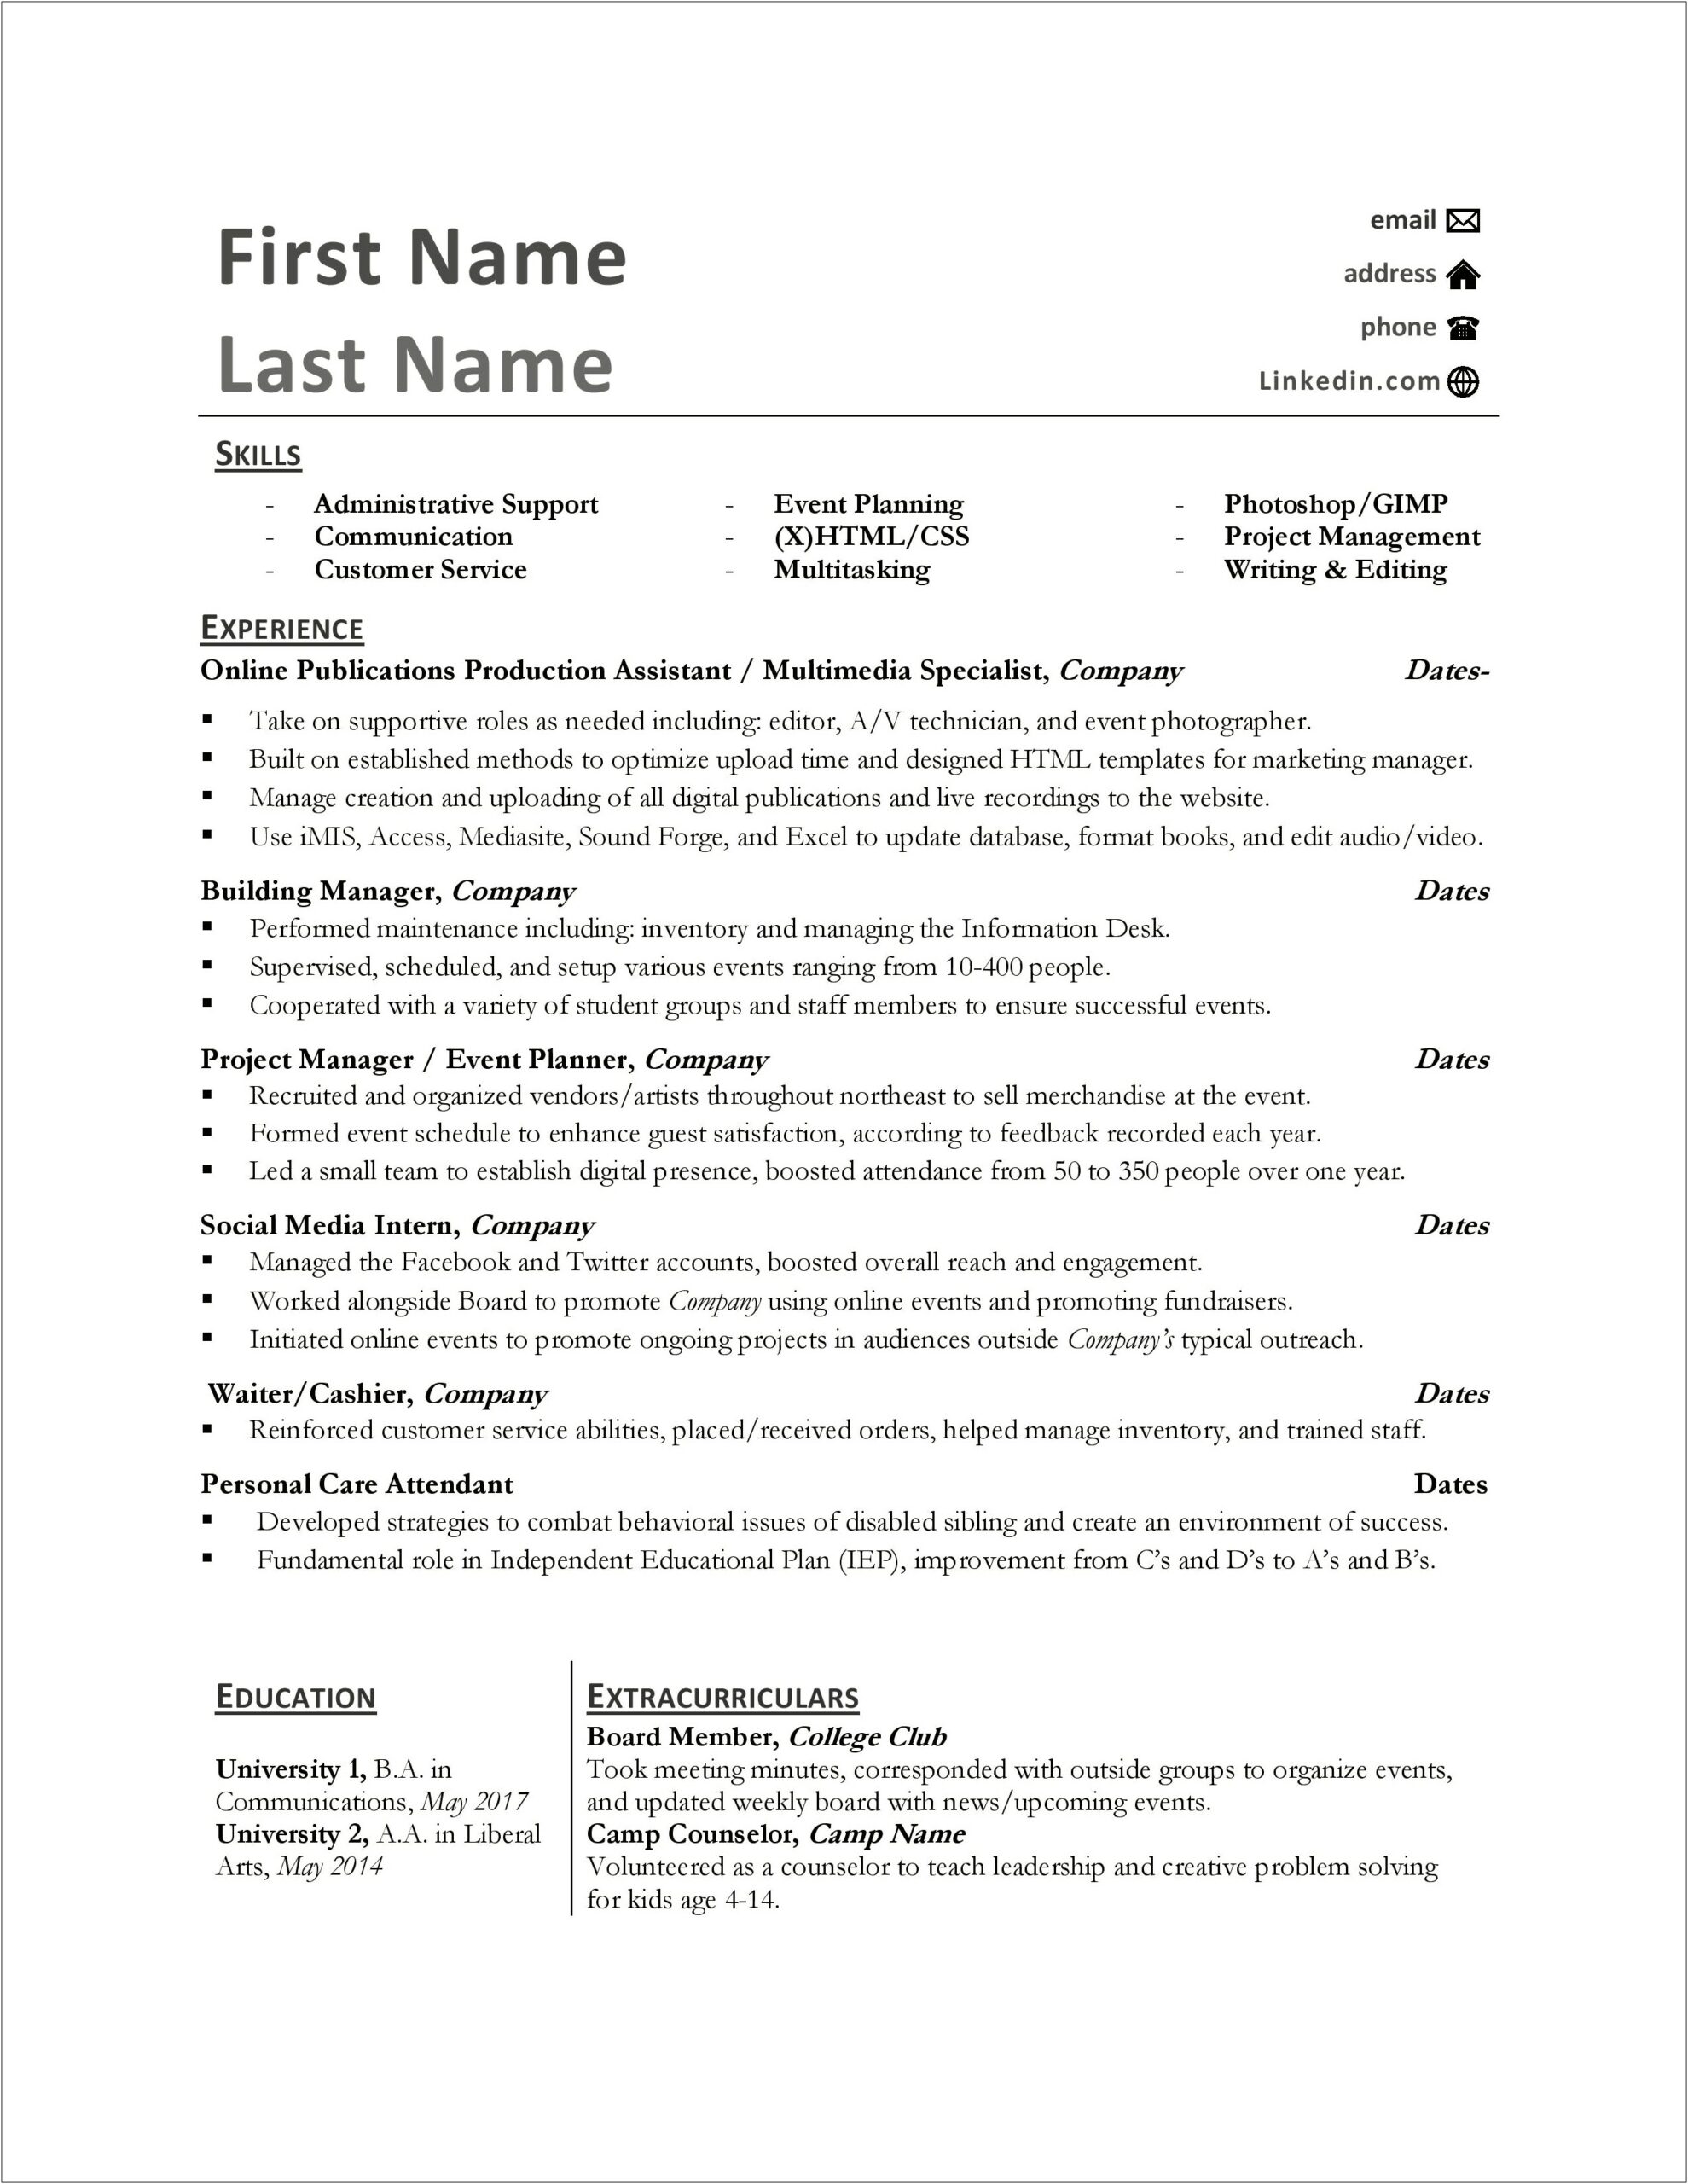 Resume Sample Multiple Position Same Company